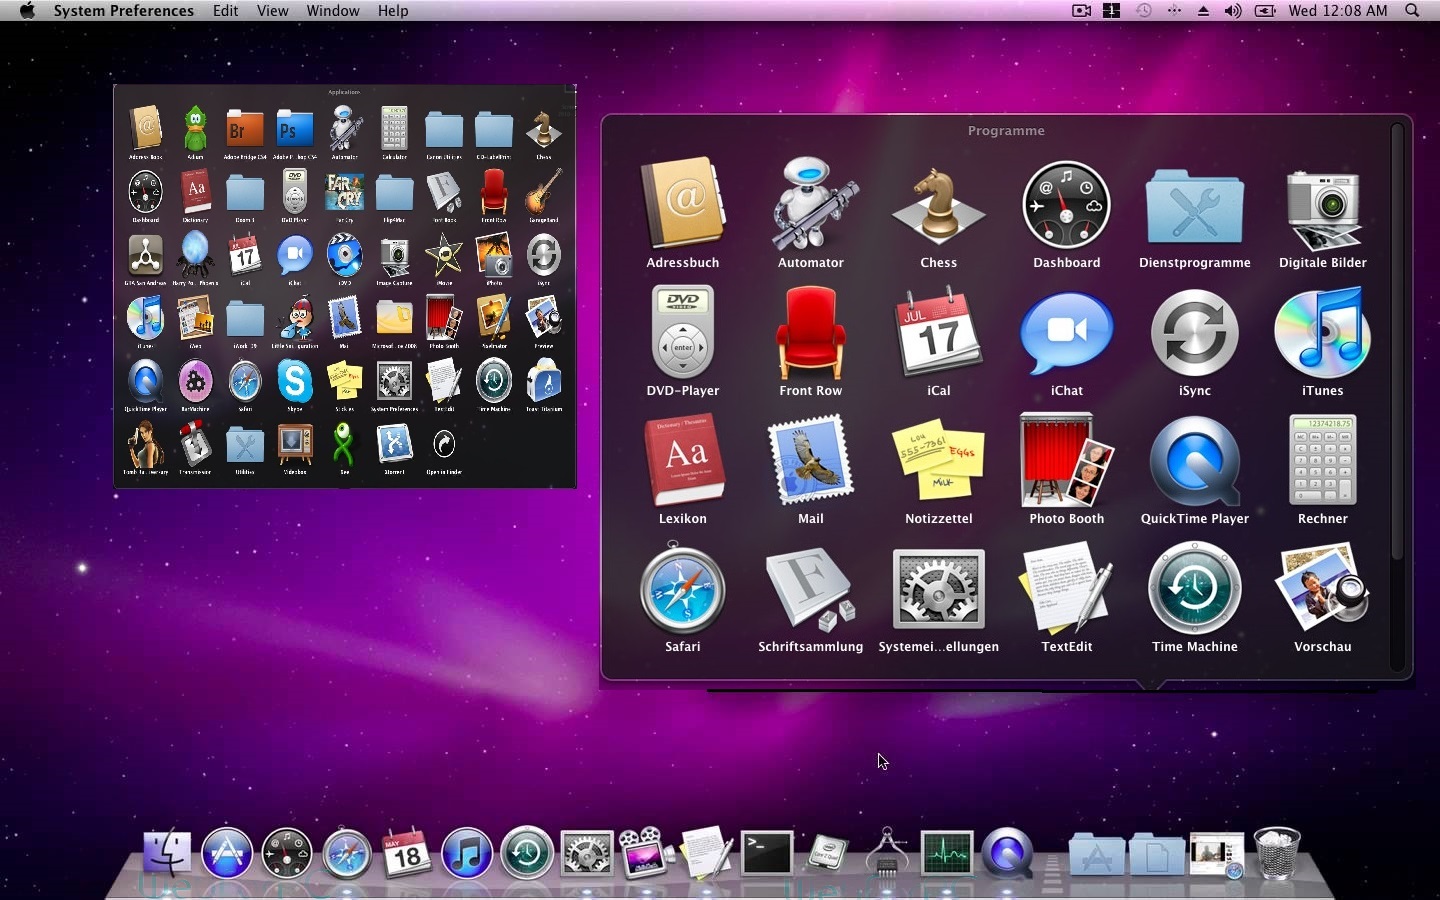 virtualbox for mac os x 10.6.8 download